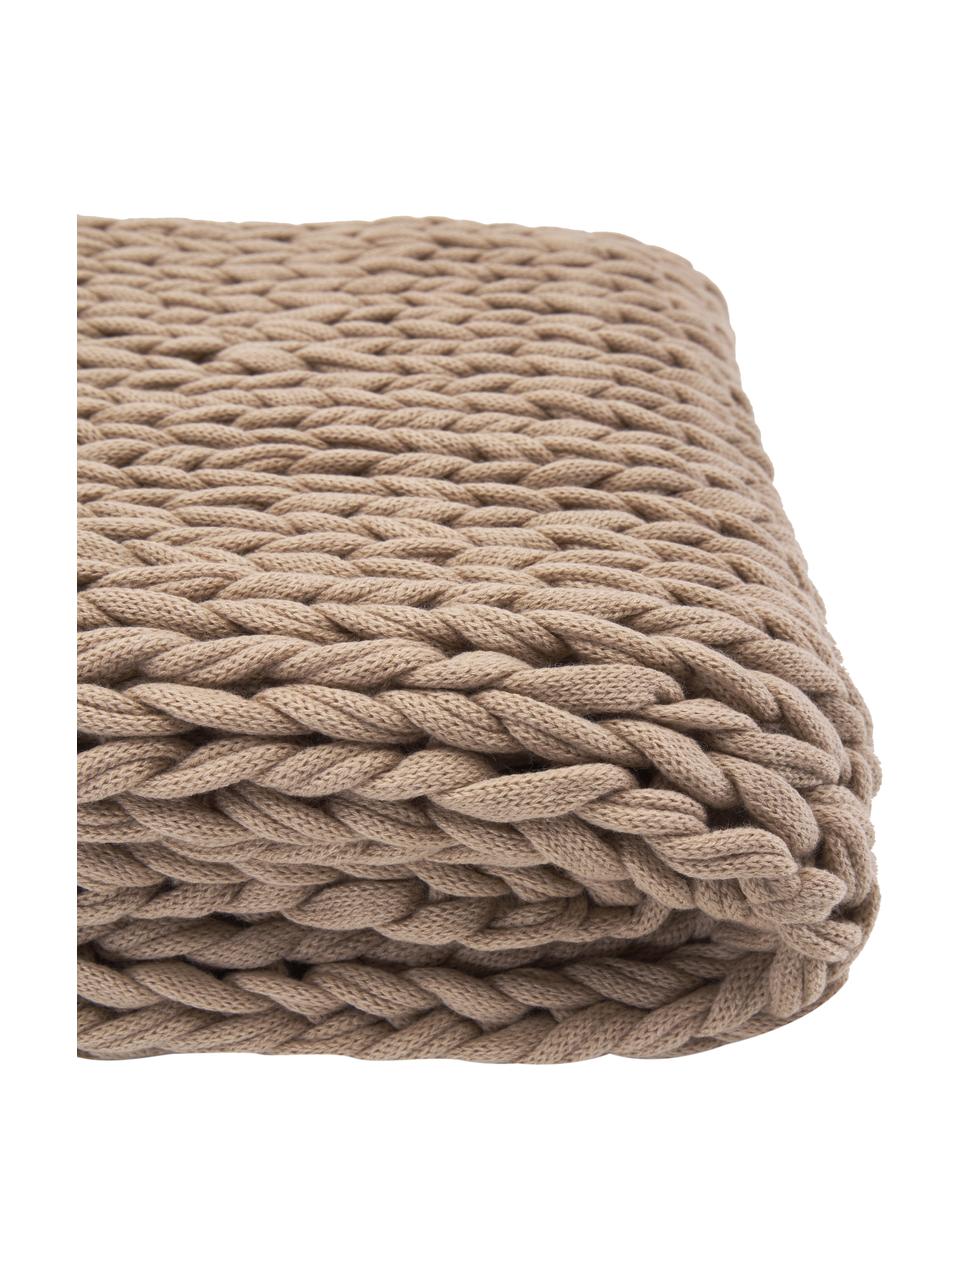 Coperta a maglia grossa beige fatta a mano Adyna, 100% poliacrilico, Beige, Larg. 130 x Lung. 170 cm